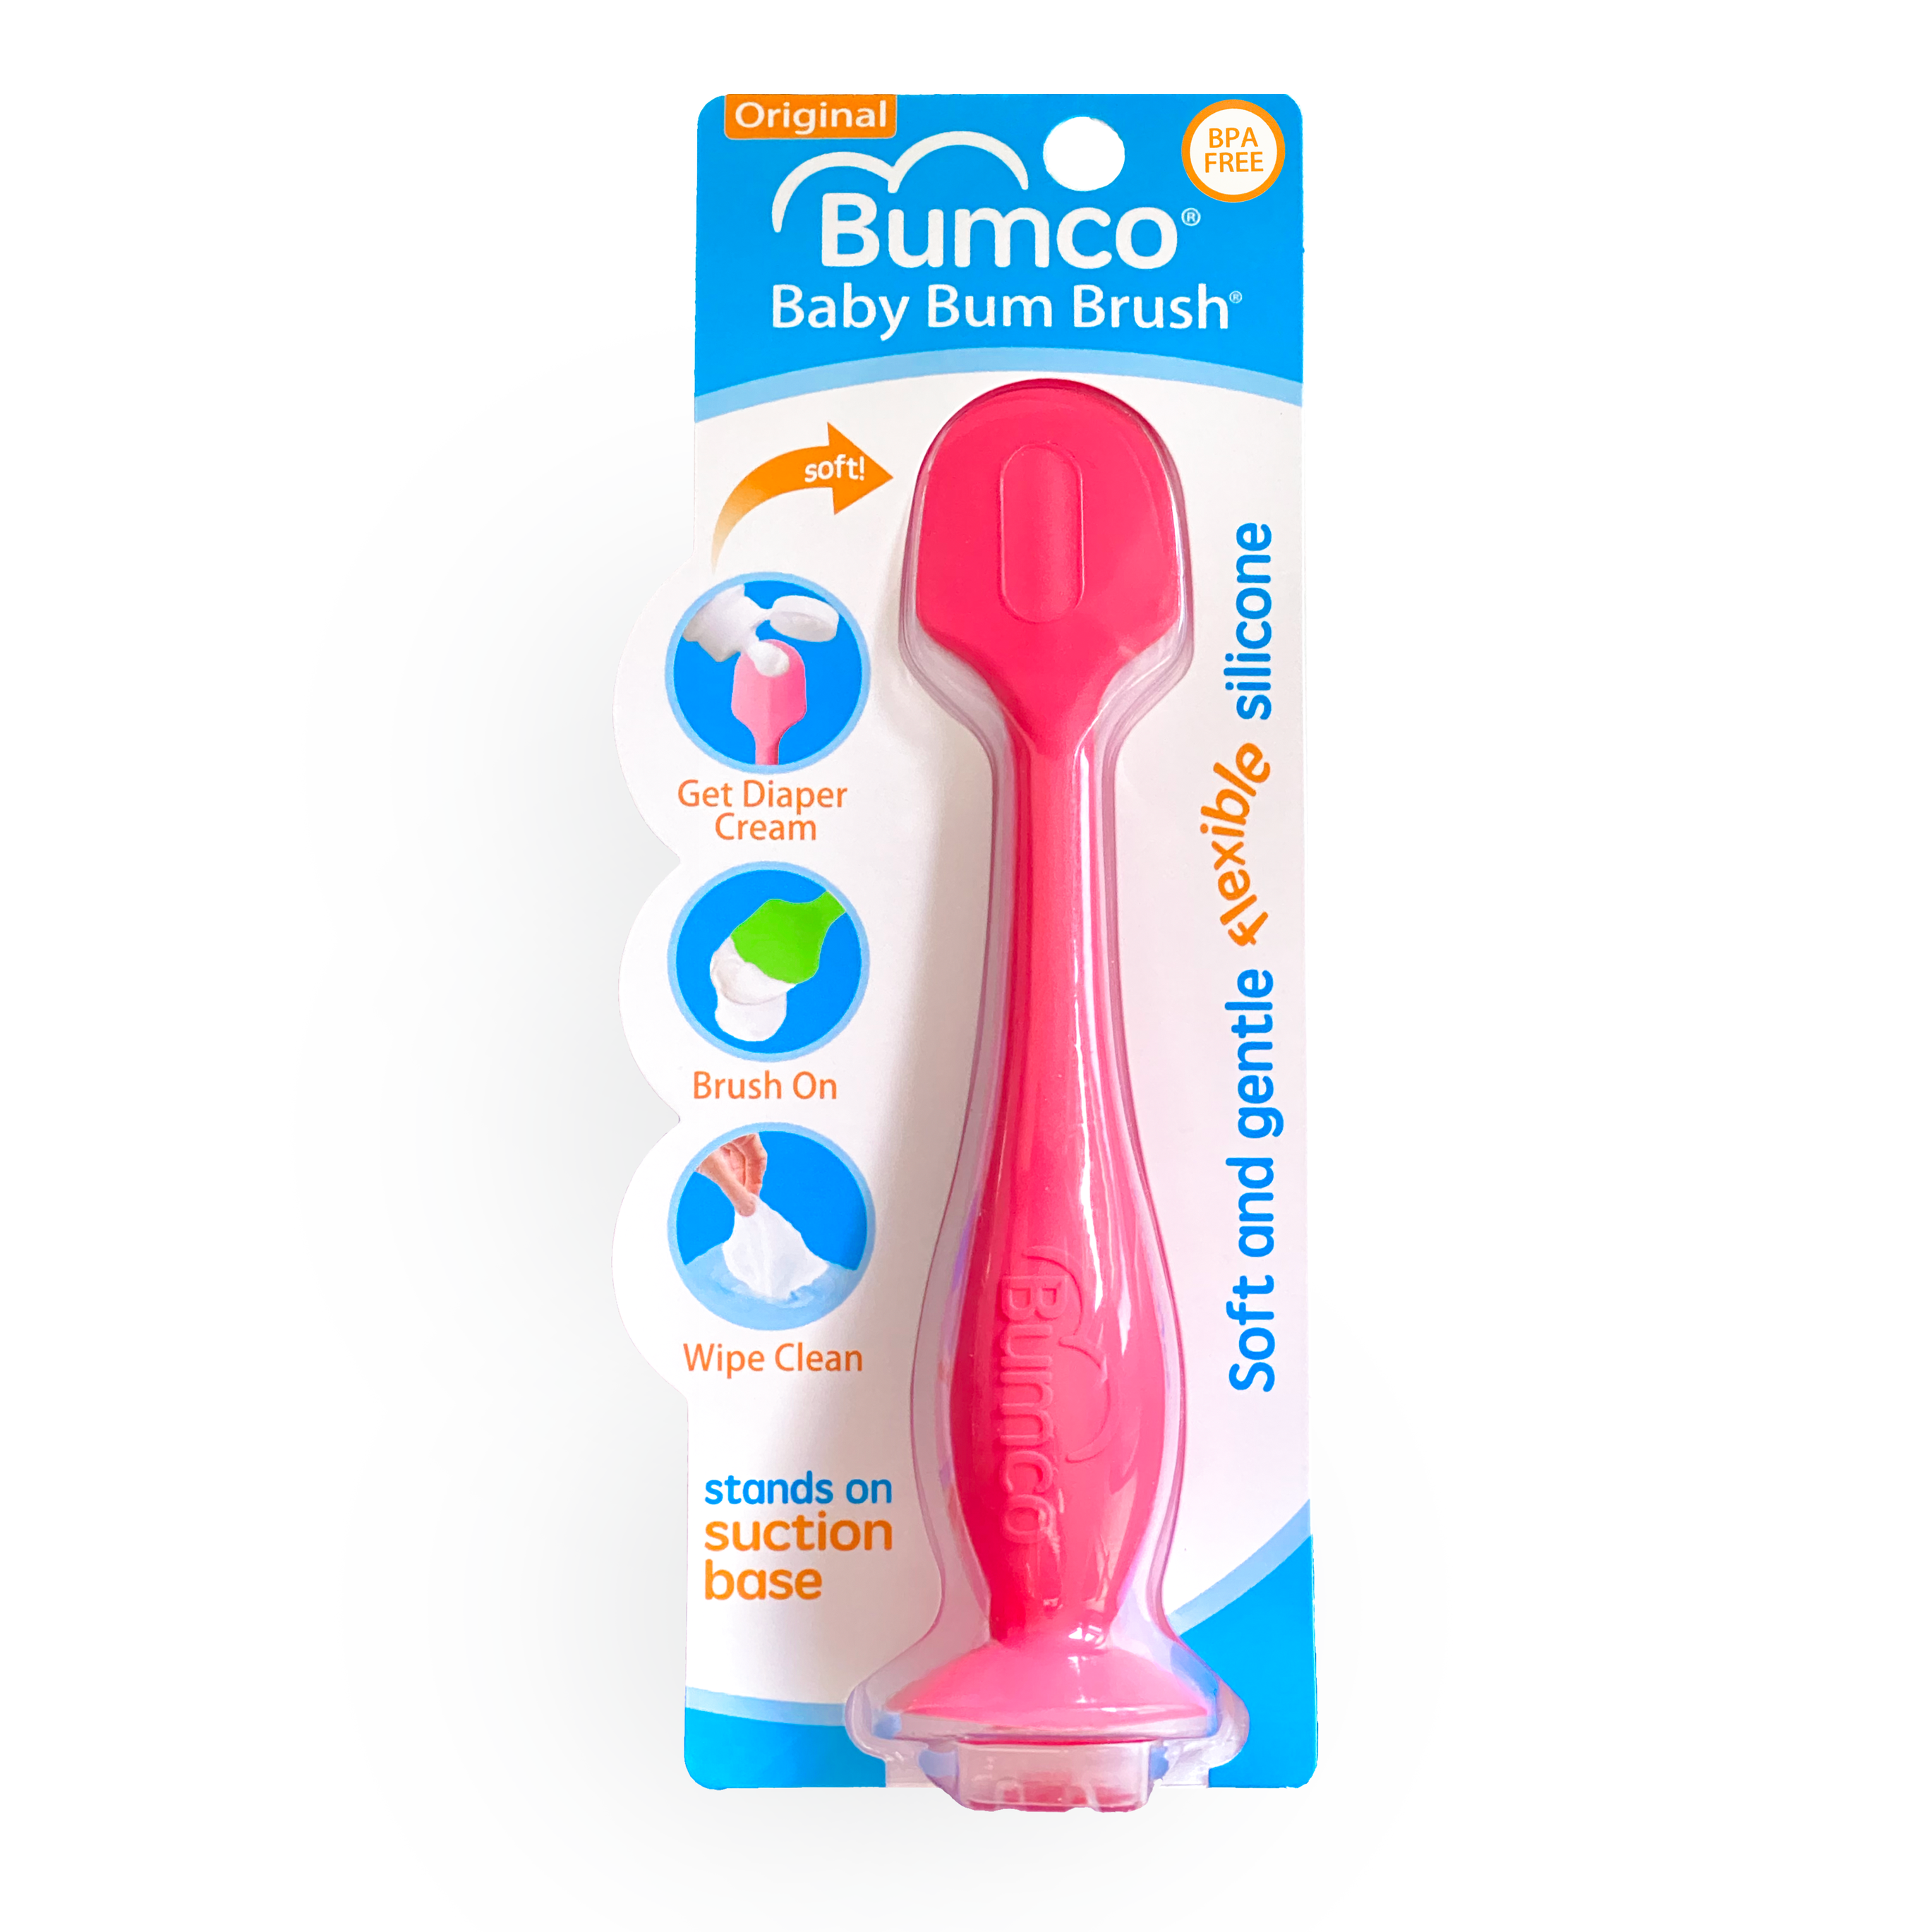 Baby Bum Brush Applicator for Diaper Cream